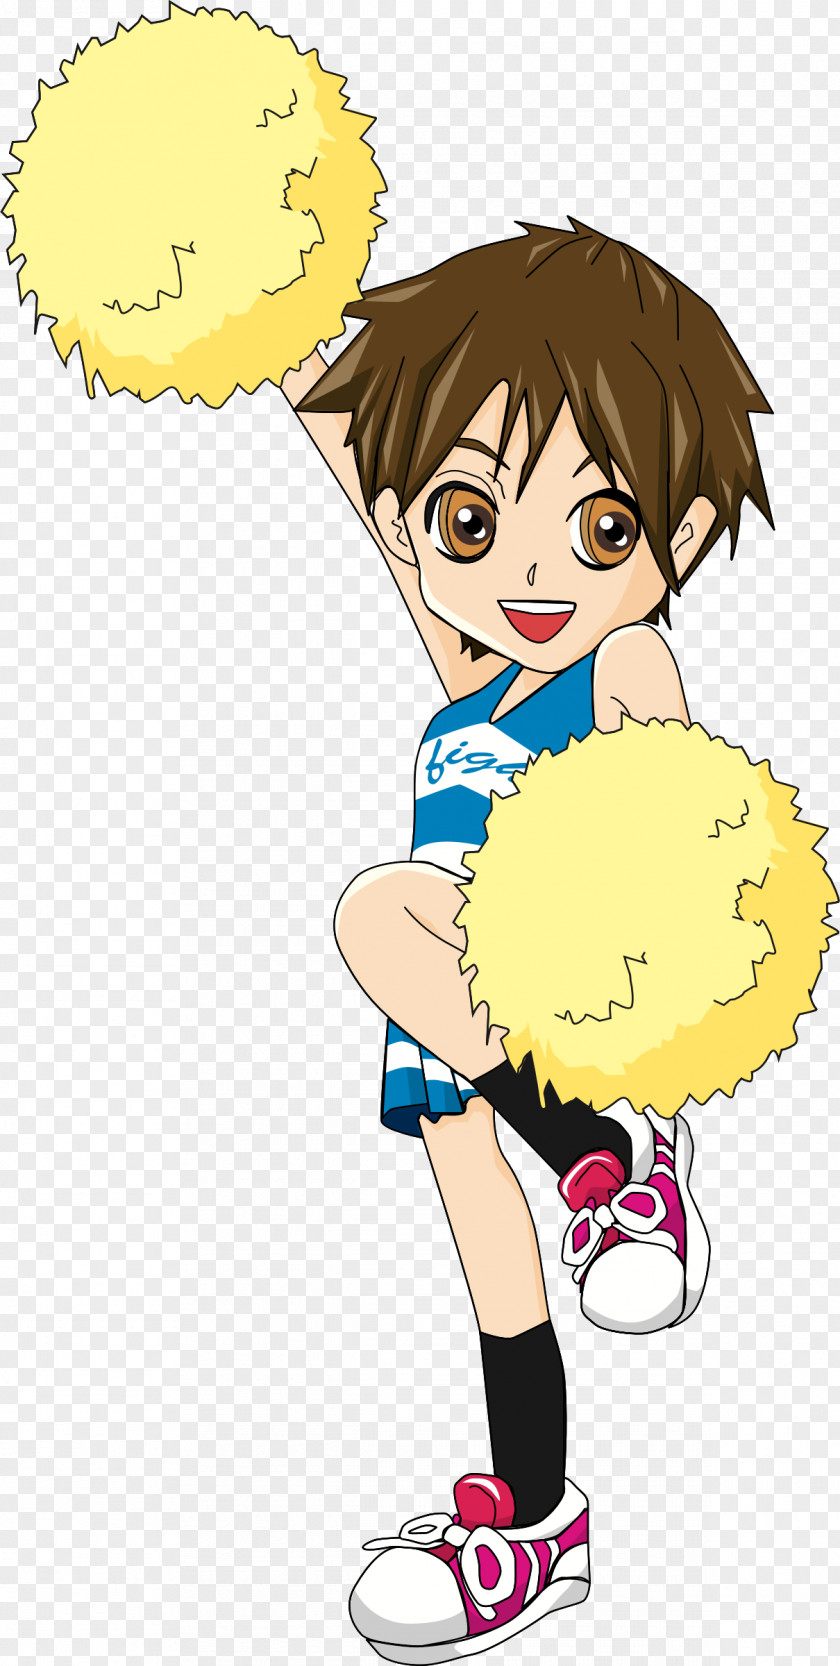 Cheer Leader Clip Art Cheerleading Illustration Image Sports PNG